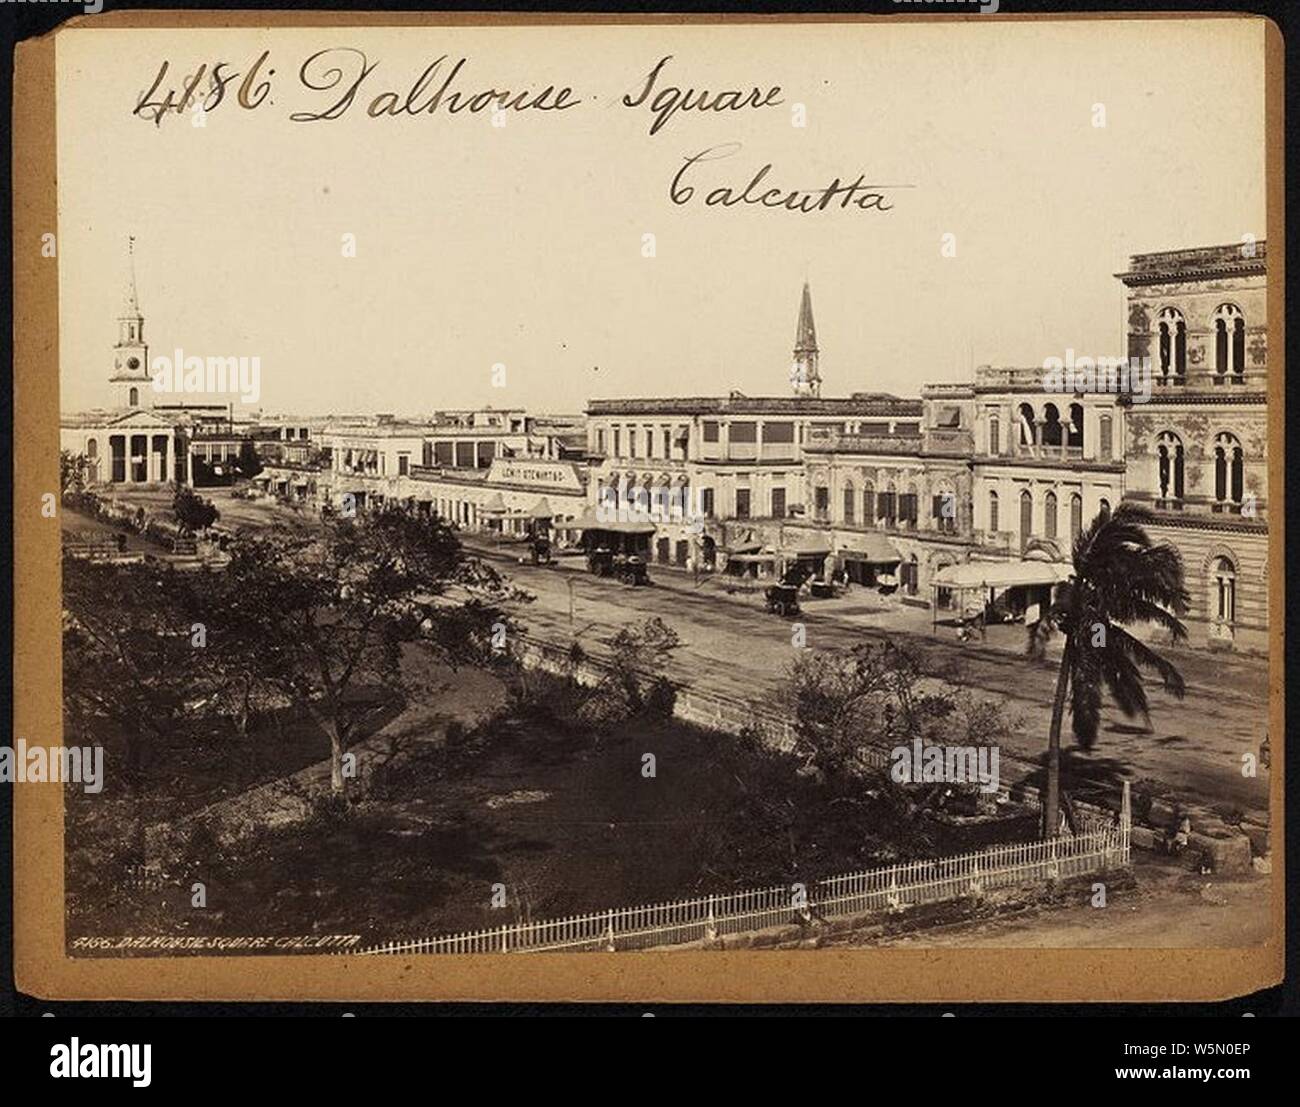 Dalhouse Square Calcutta by Francis Frith. Stock Photo